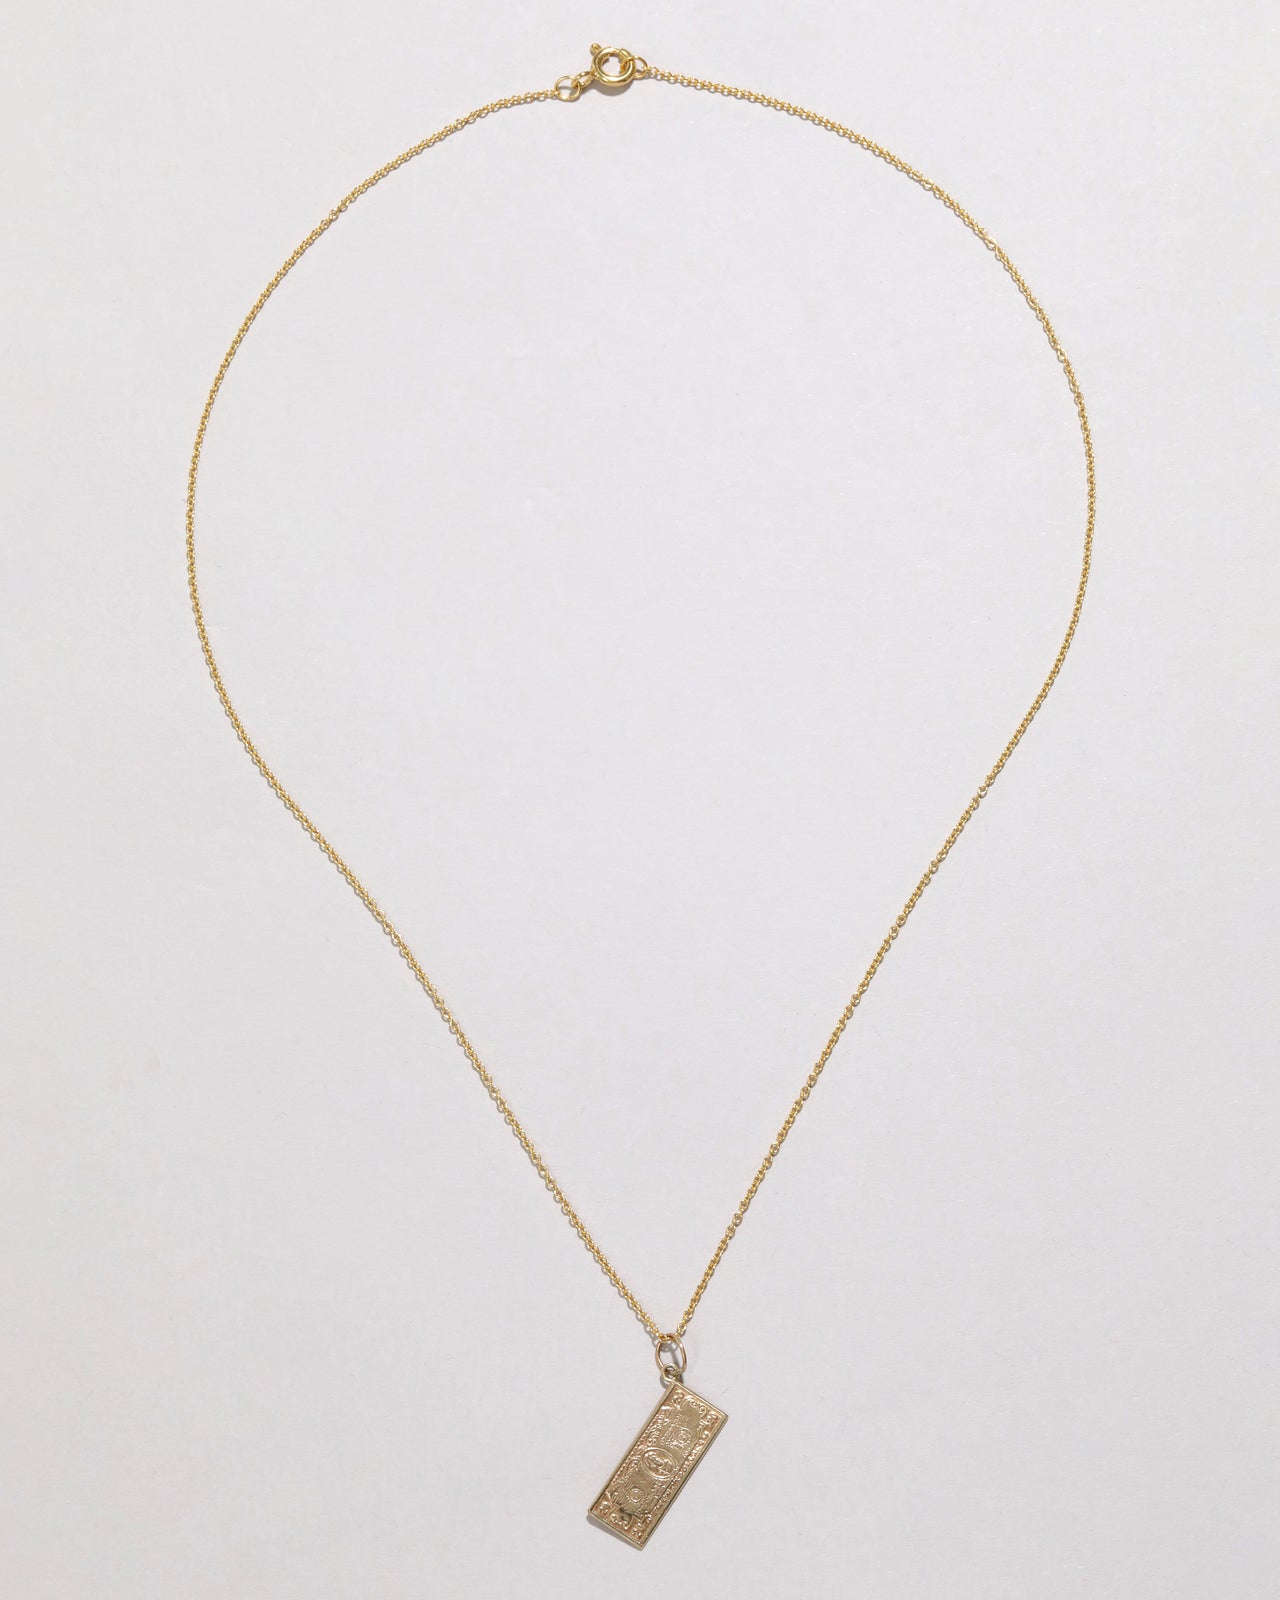 Vintage 1970s 14k Gold Handmade Dollar Pendant Necklace - Photo 2